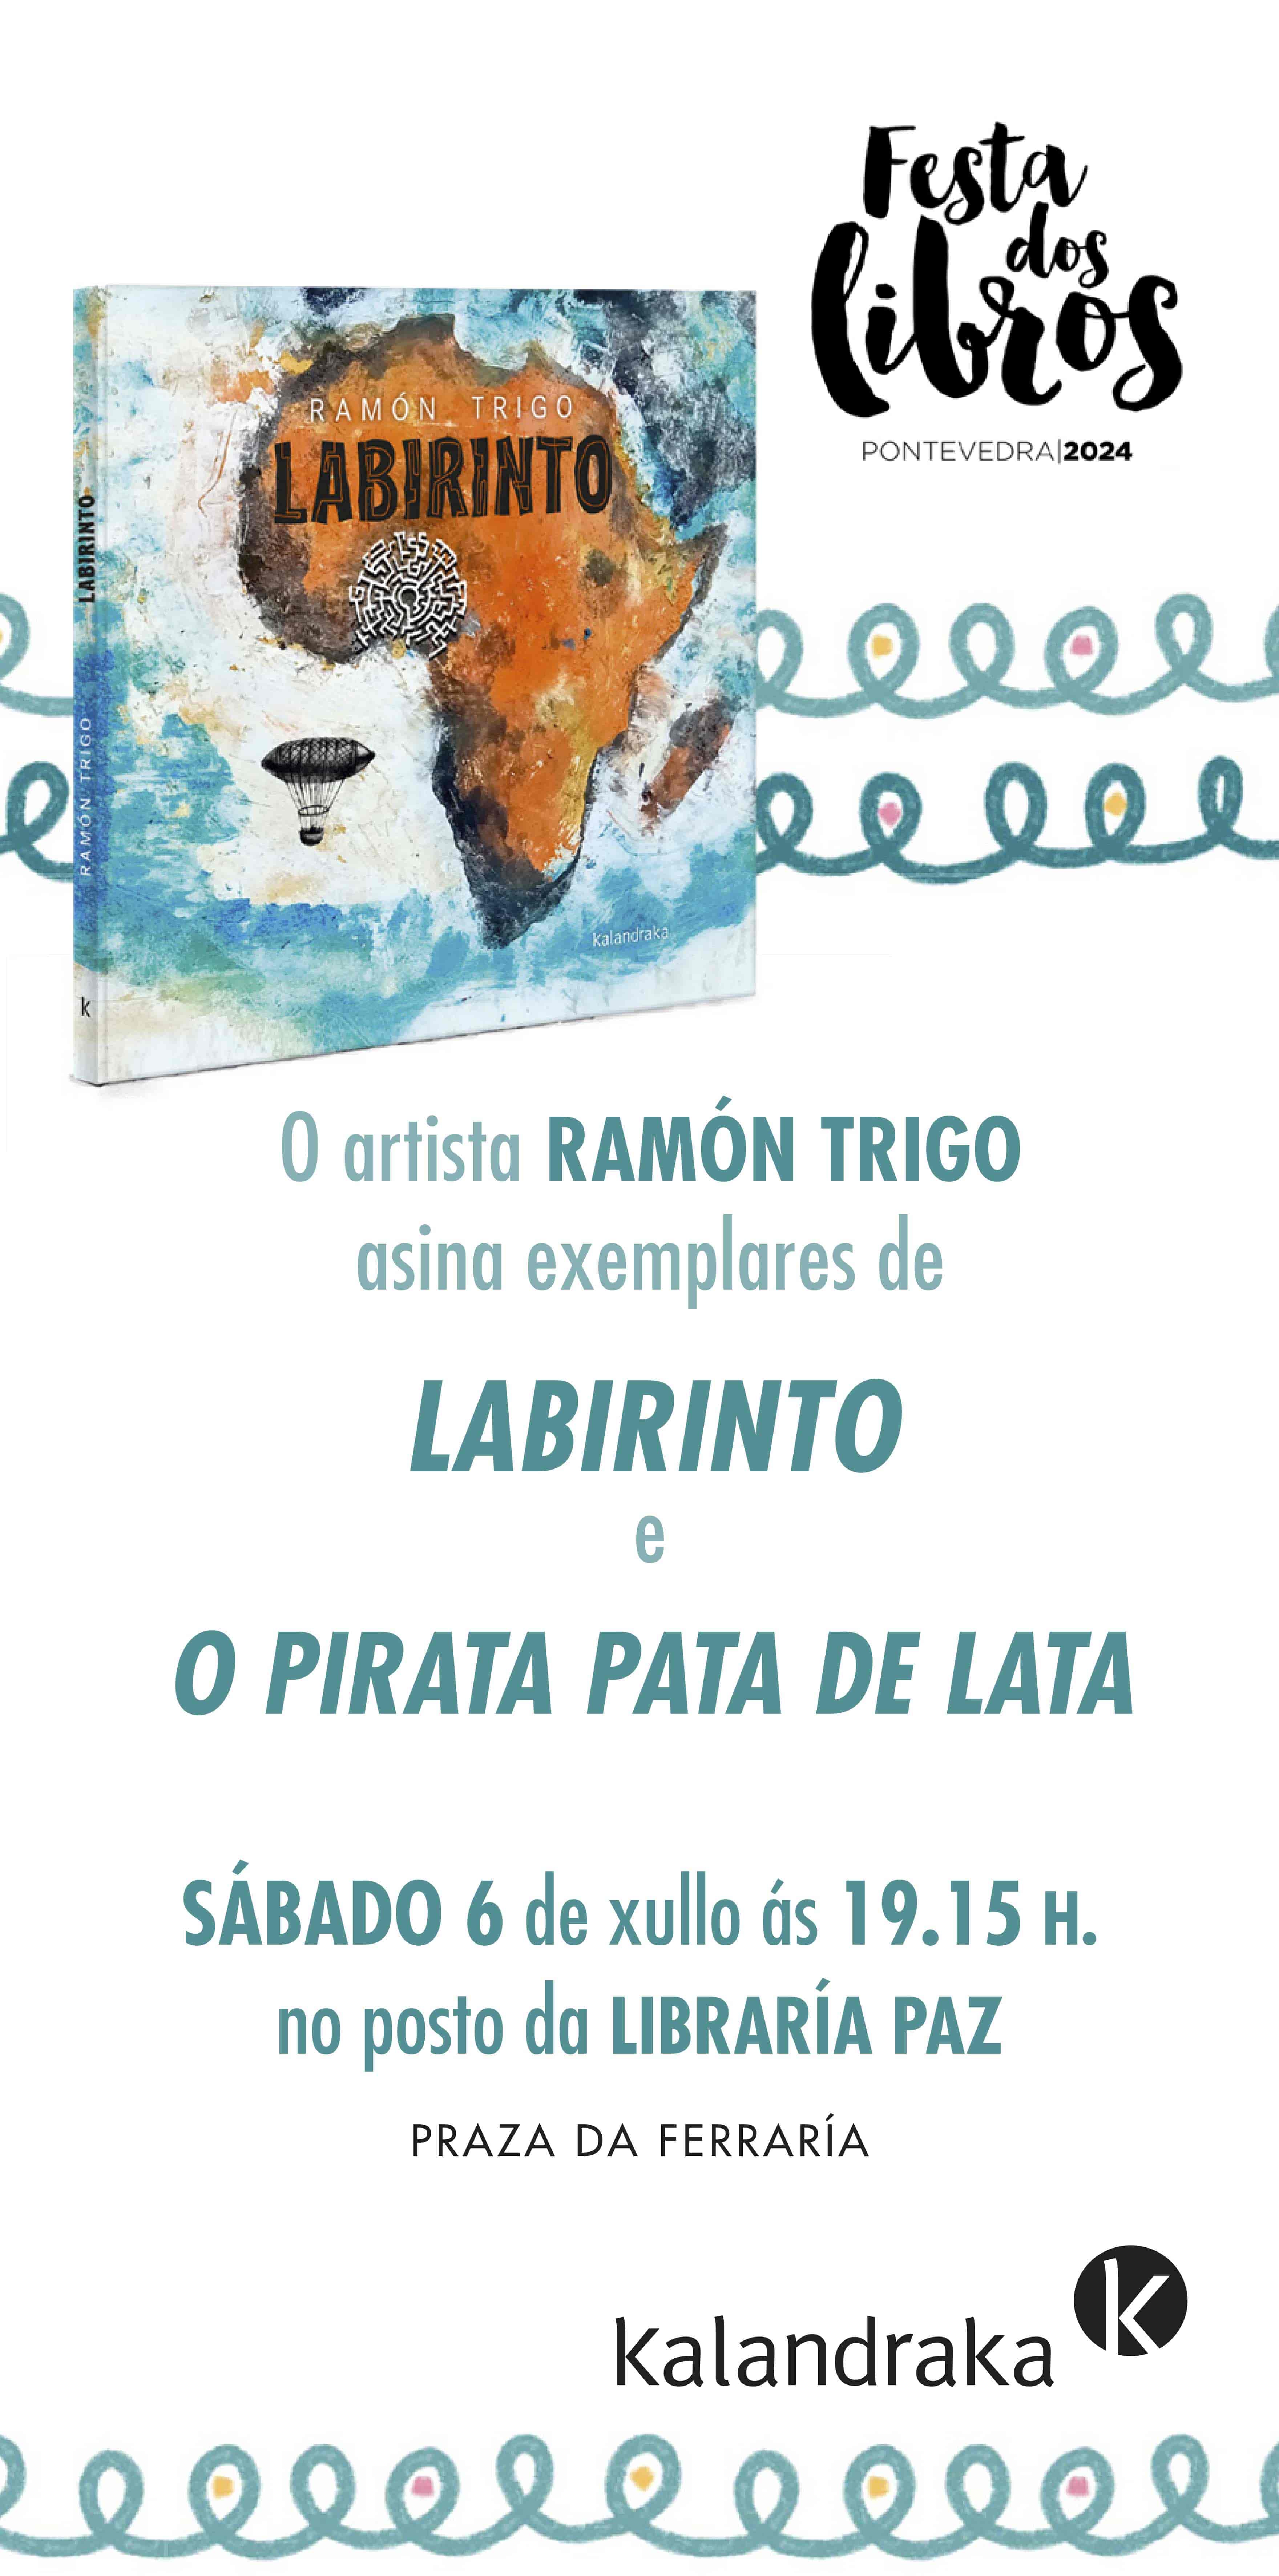 FESTA DOS LIBROS DE PONTEVEDRA: RAMÓN TRIGO ASINA “LABIRINTO”